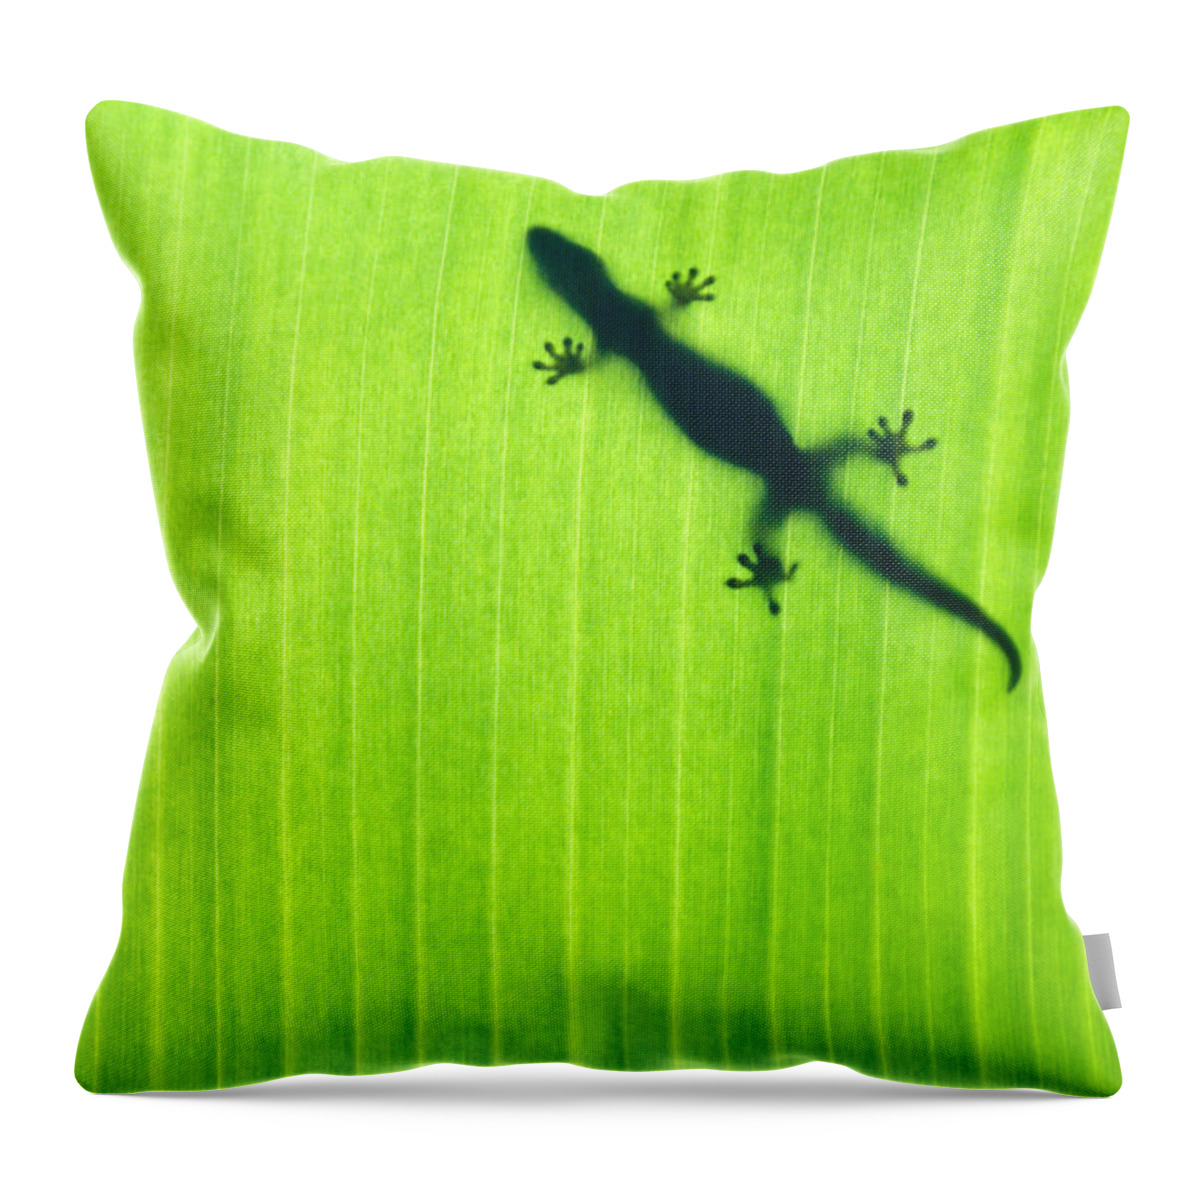 Green Throw Pillow featuring the photograph Banana Leaf Gecko by Sean Davey